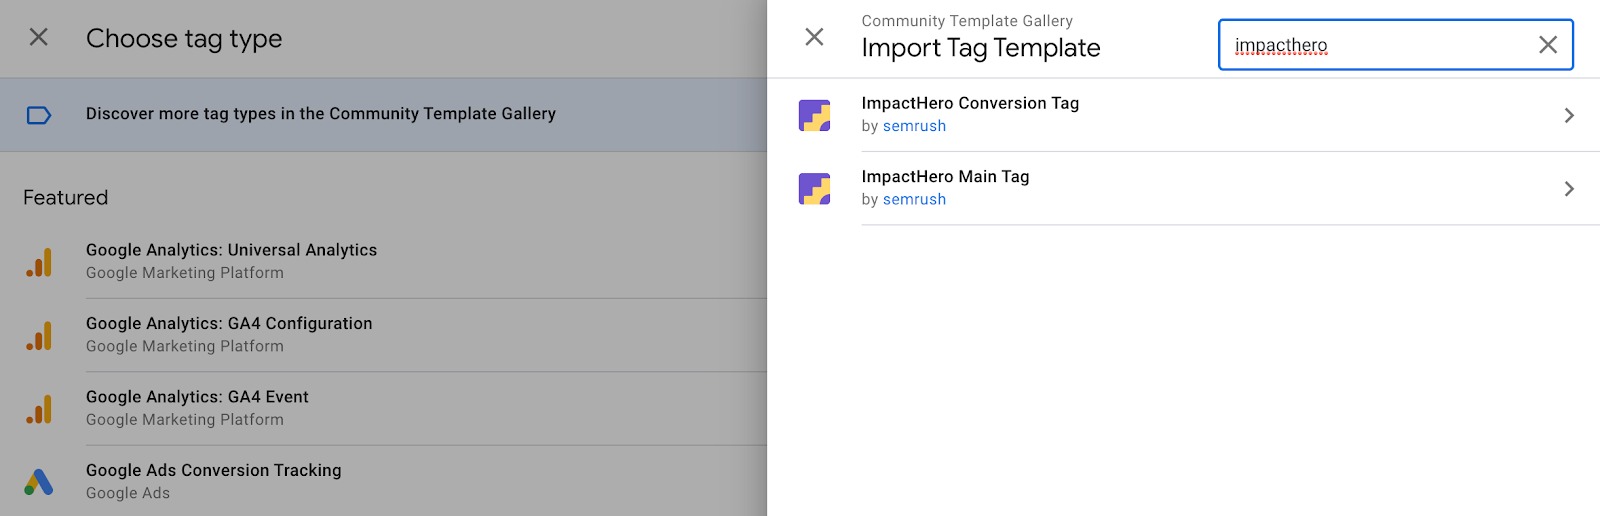 Setting Up ImpactHero Via Google Tag Manager image 3